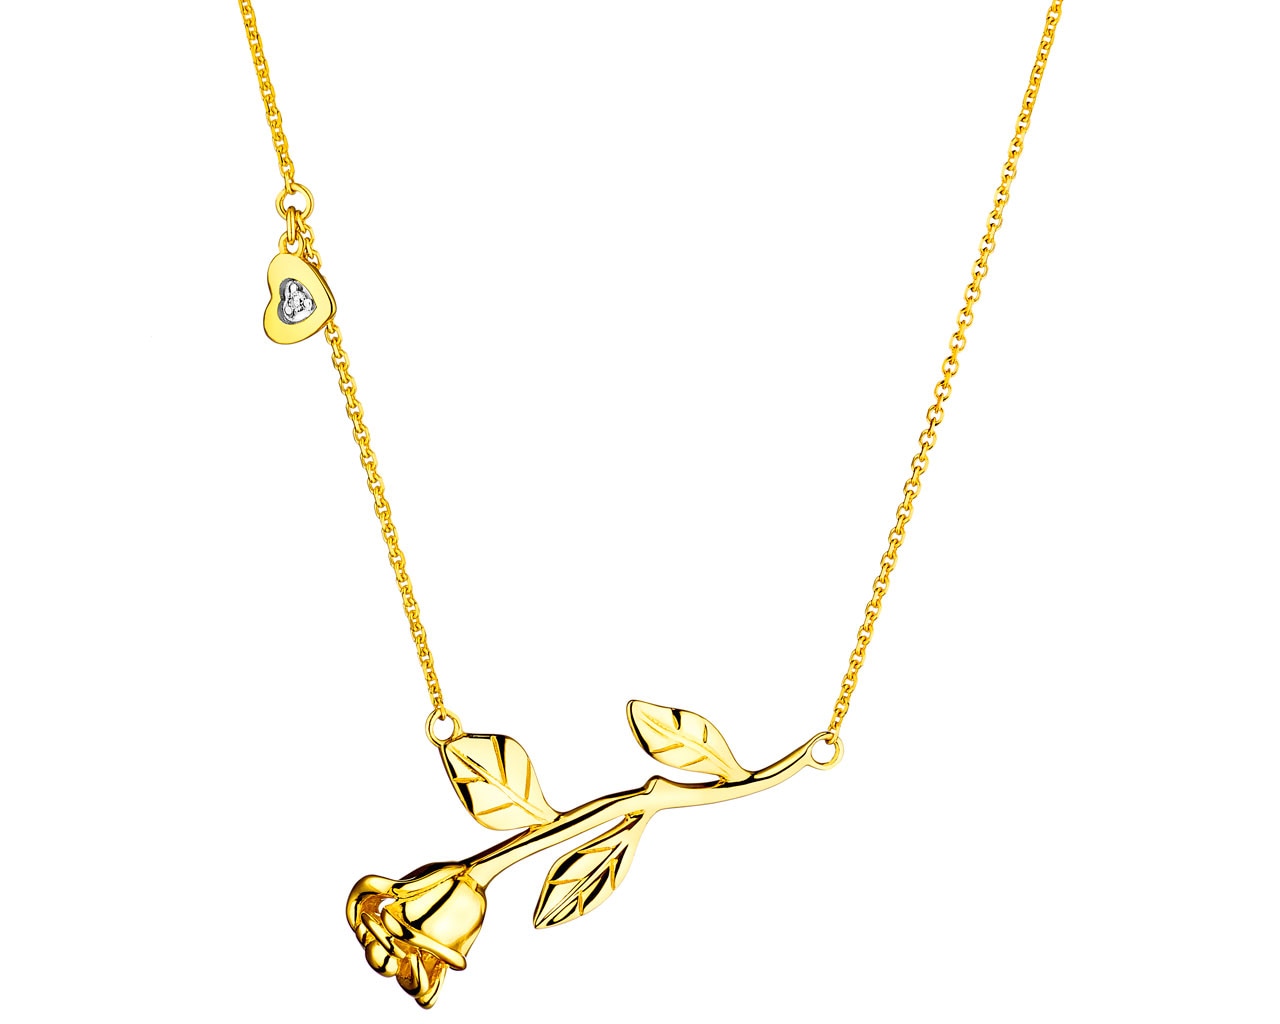 Yellow Gold Diamond Necklace - Flower, Heart 0,005 ct - fineness 14 K